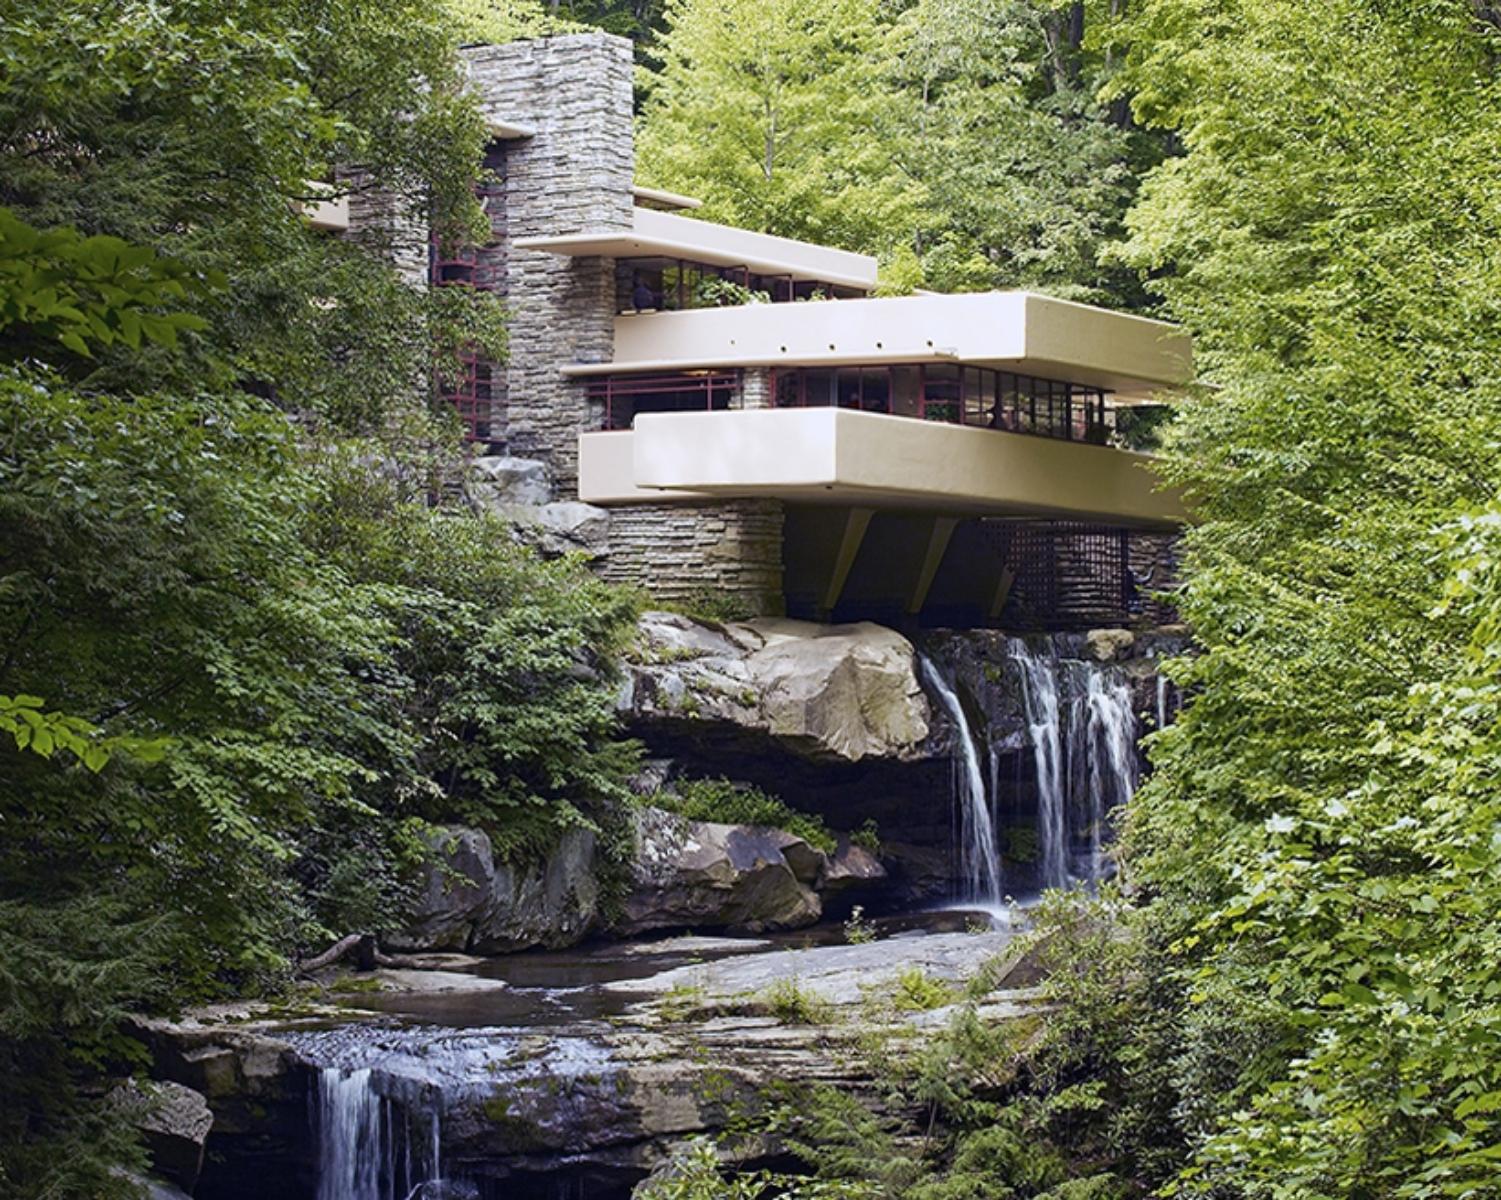 7. Kauffman Residence or Falling water–Pittsburgh, Pennsylvania